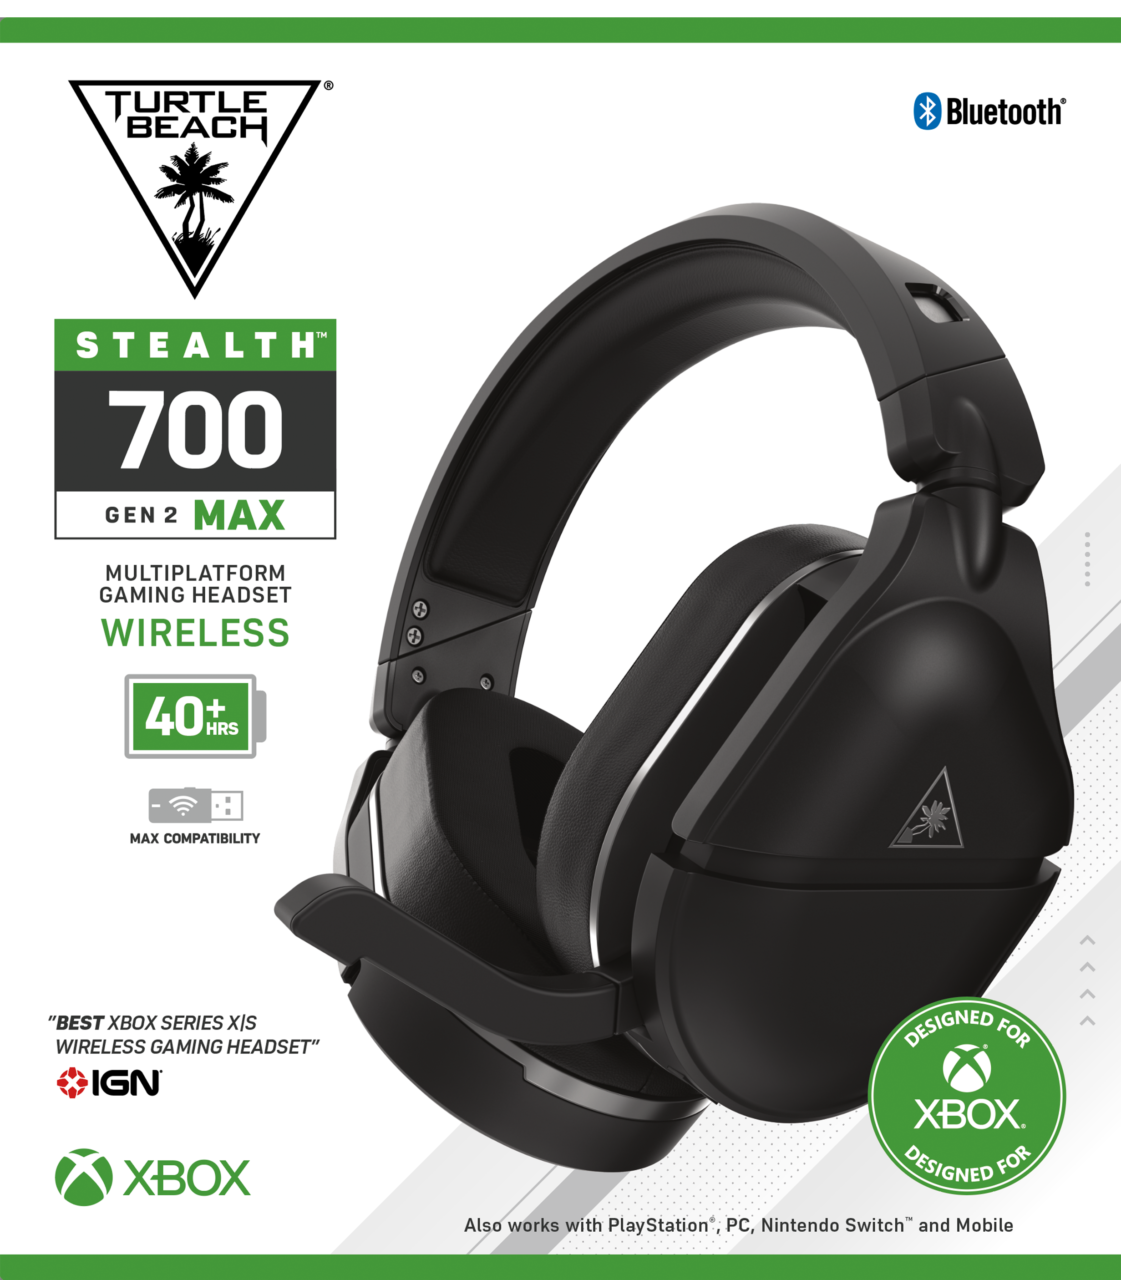 Stealth 700 Gen 2 Max Premium Wireless Gaming Headset for Xbox (Turtle Beach)